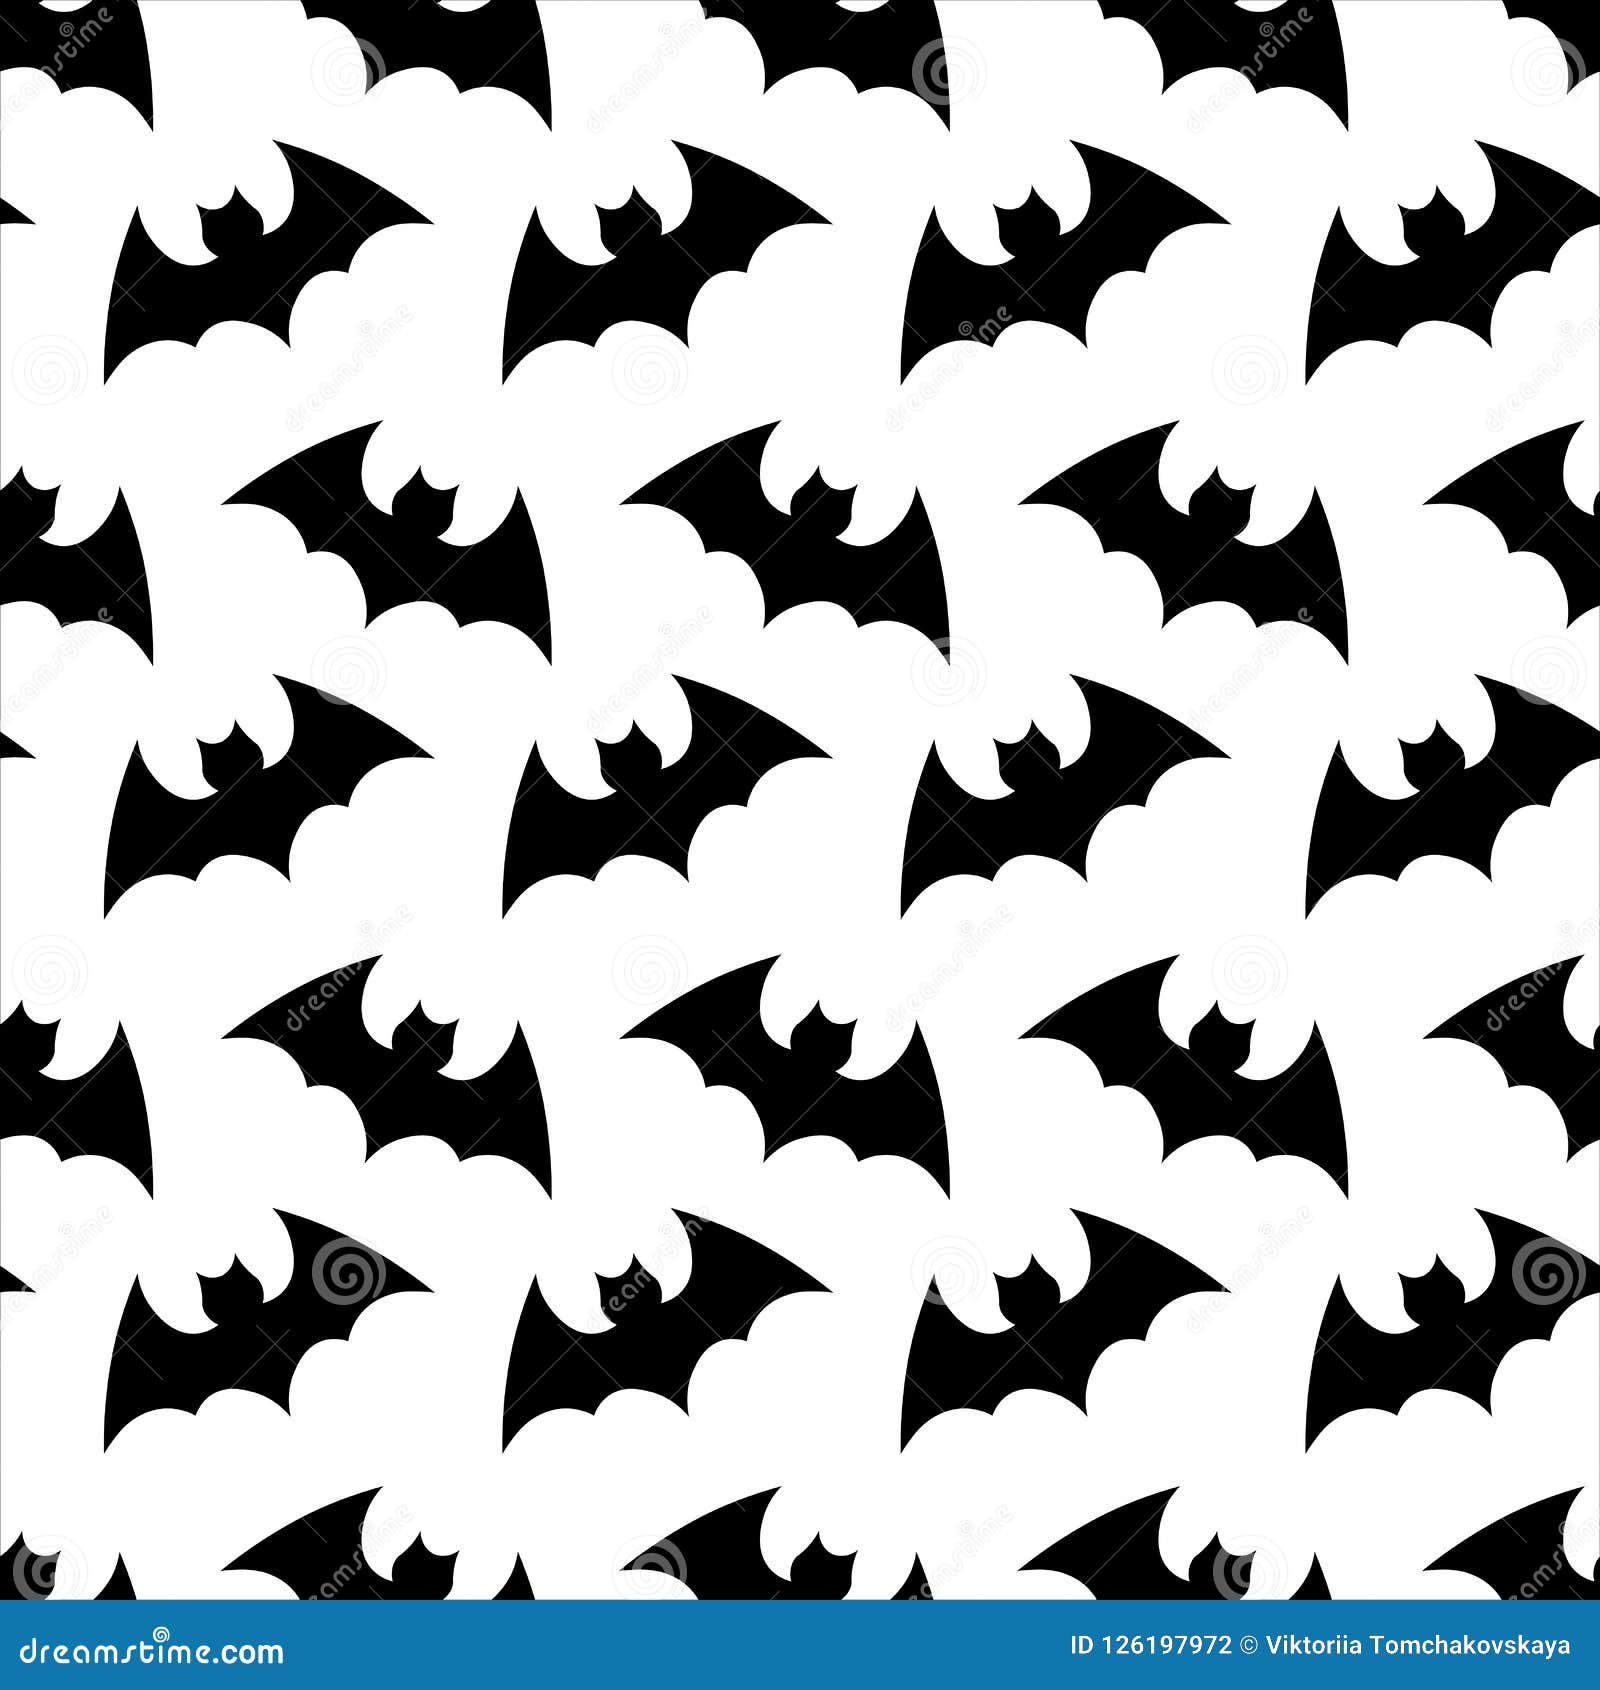 Halloween background and bats image  Halloween wallpaper backgrounds  Halloween wallpaper iphone Fall wallpaper